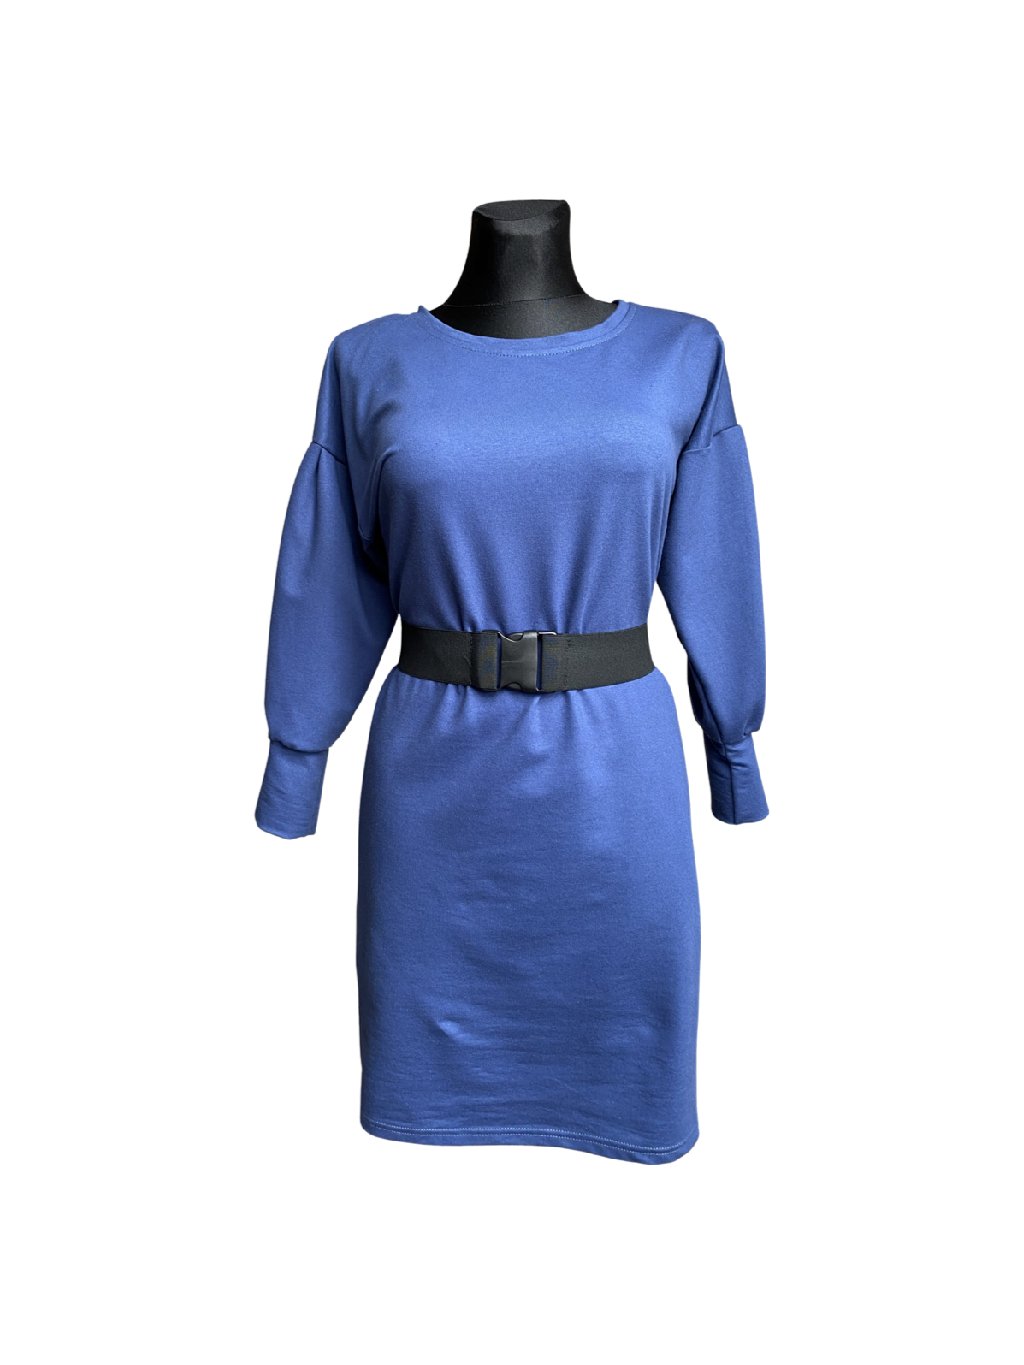 Oliwia Ofelia mikinové šaty s páskem 67199 - tm. modré